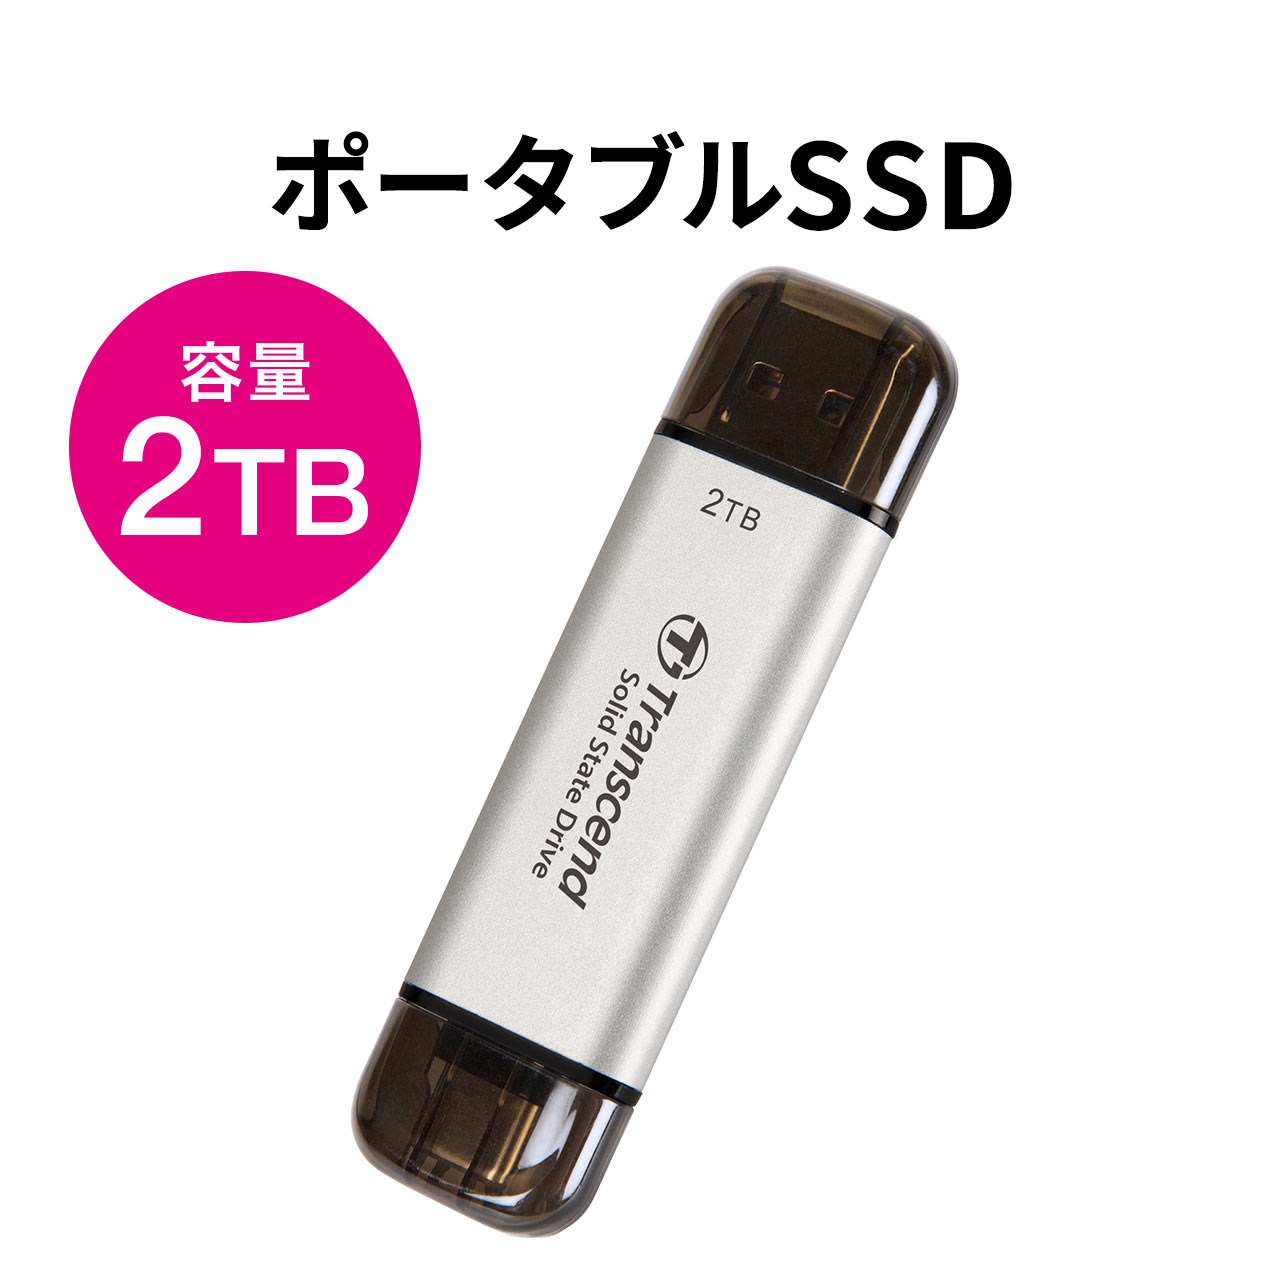 L字 USB Type C to Mini USB 5ピン 変換ケーブル 27cm/USB C-Mini-B 5ピン アダプタ ケーブル オス−メス  : 10000346 : MahsaLinkヤフー店 - 通販 - Yahoo!ショッピング